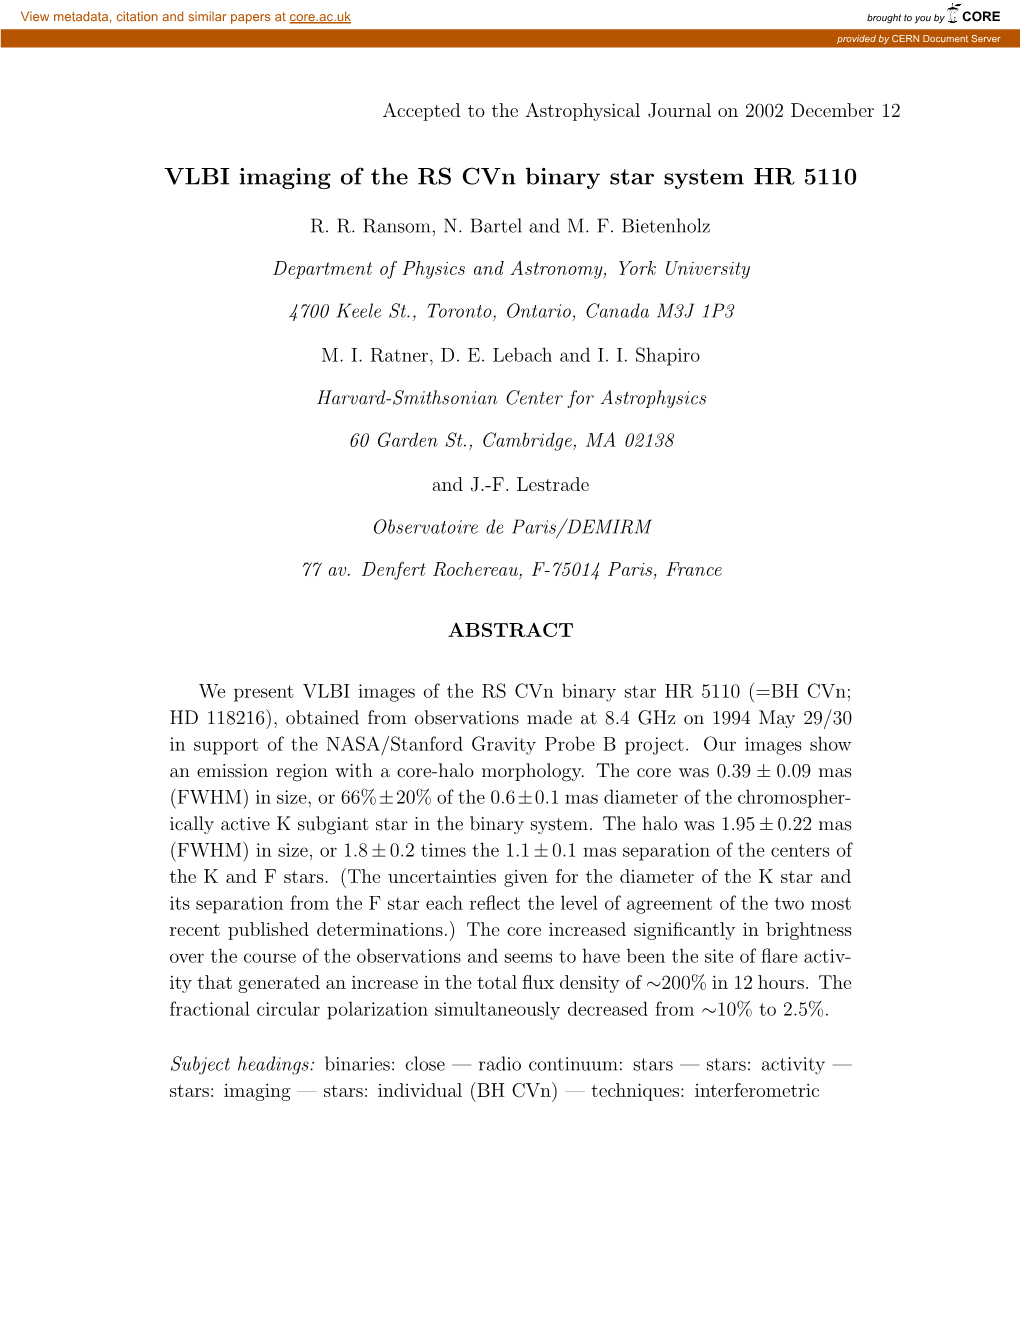 VLBI Imaging of the RS Cvn Binary Star System HR 5110